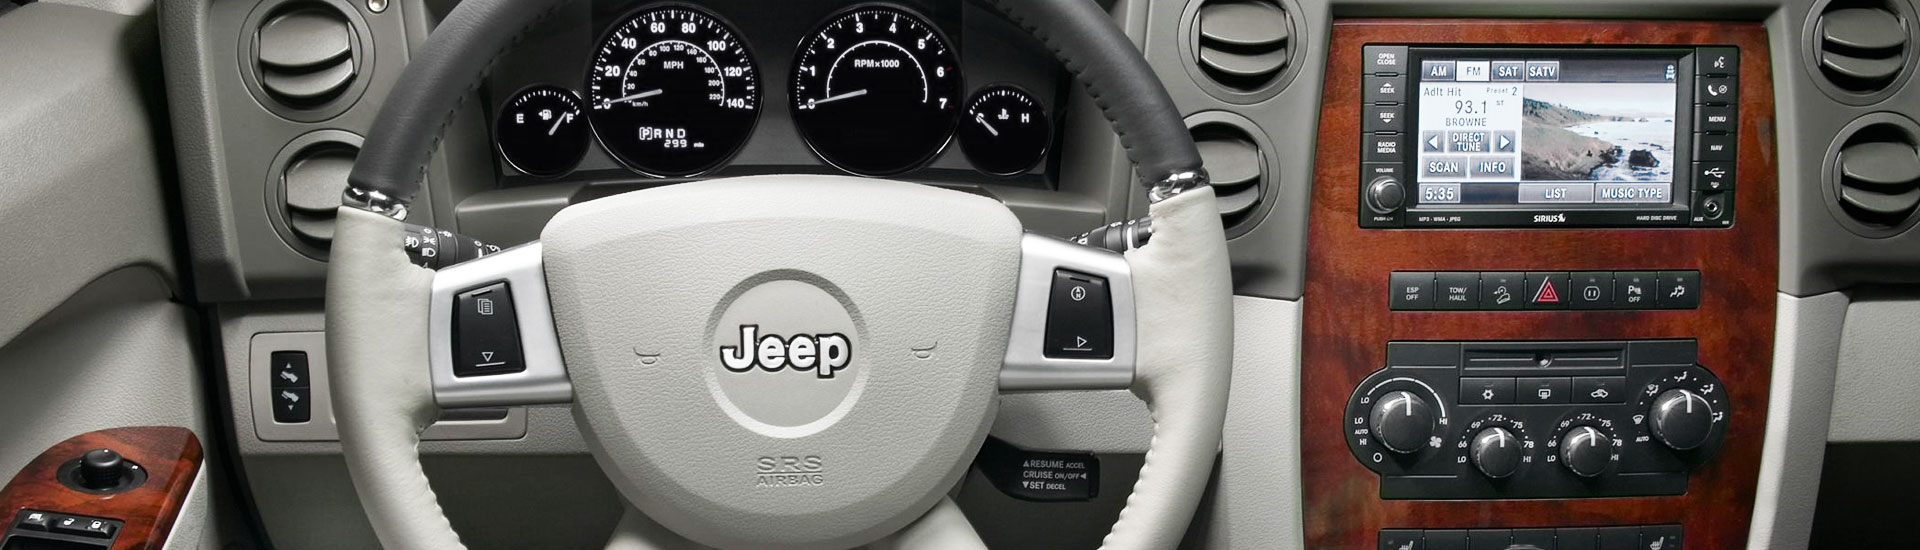 2022 Jeep Grand Cherokee Custom Dash Kits